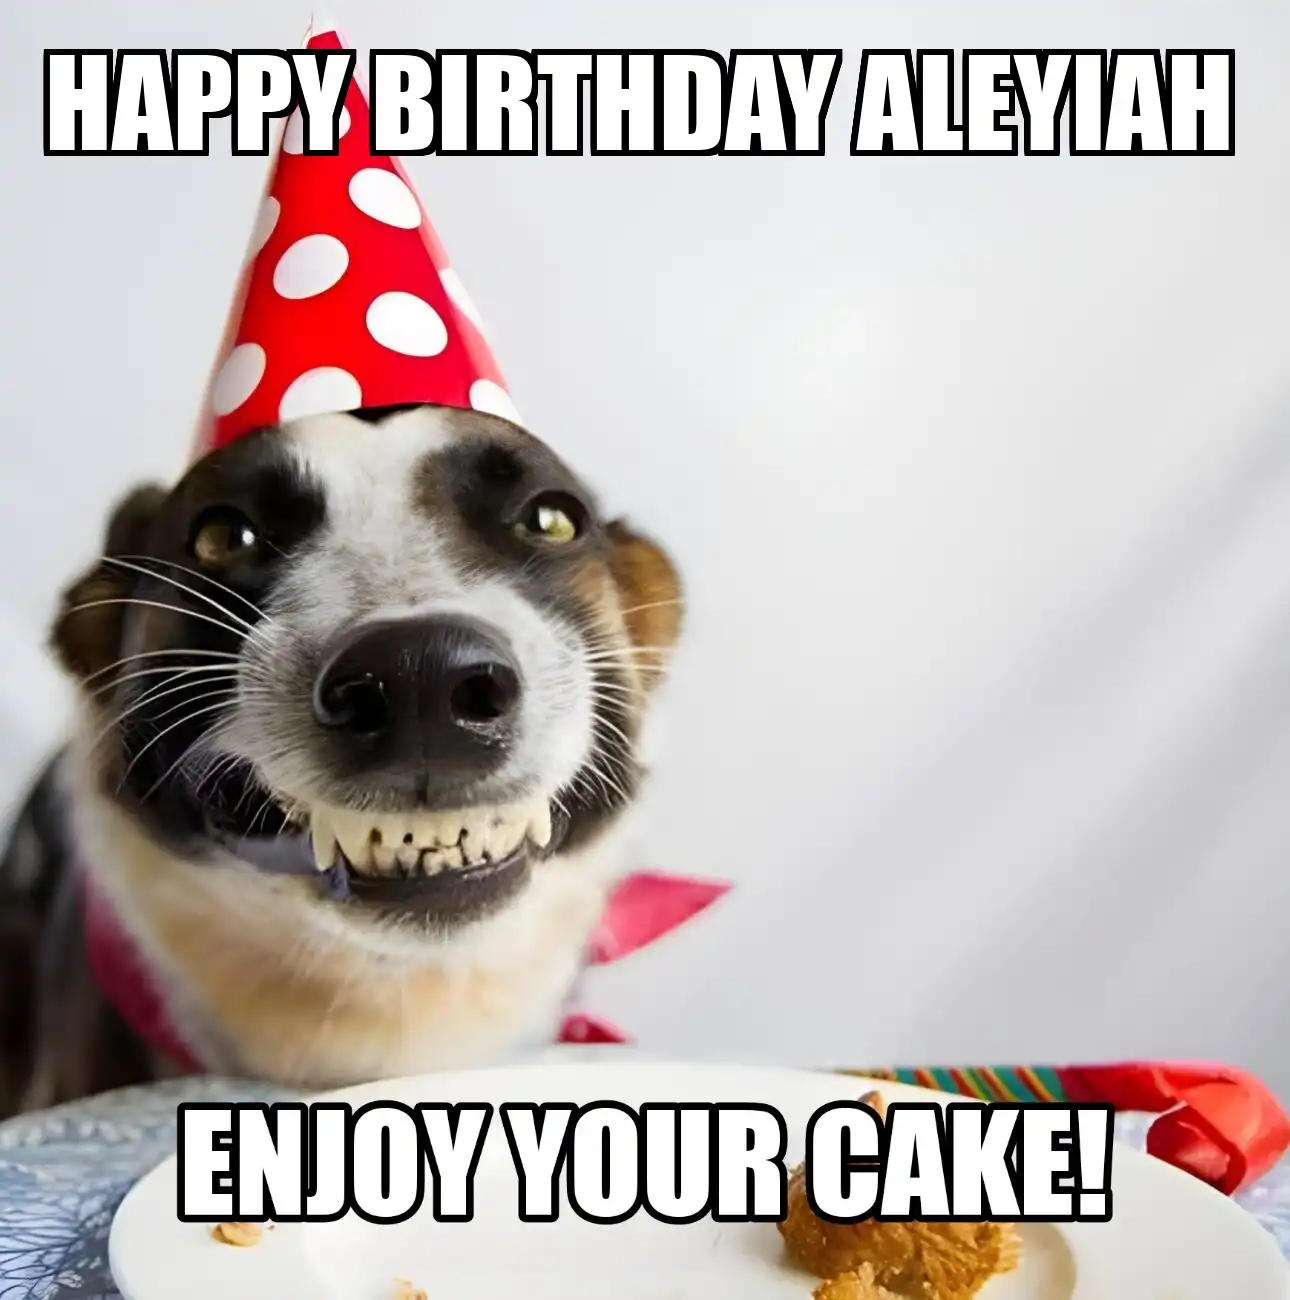 Happy Birthday Aleyiah Enjoy Your Cake Dog Meme